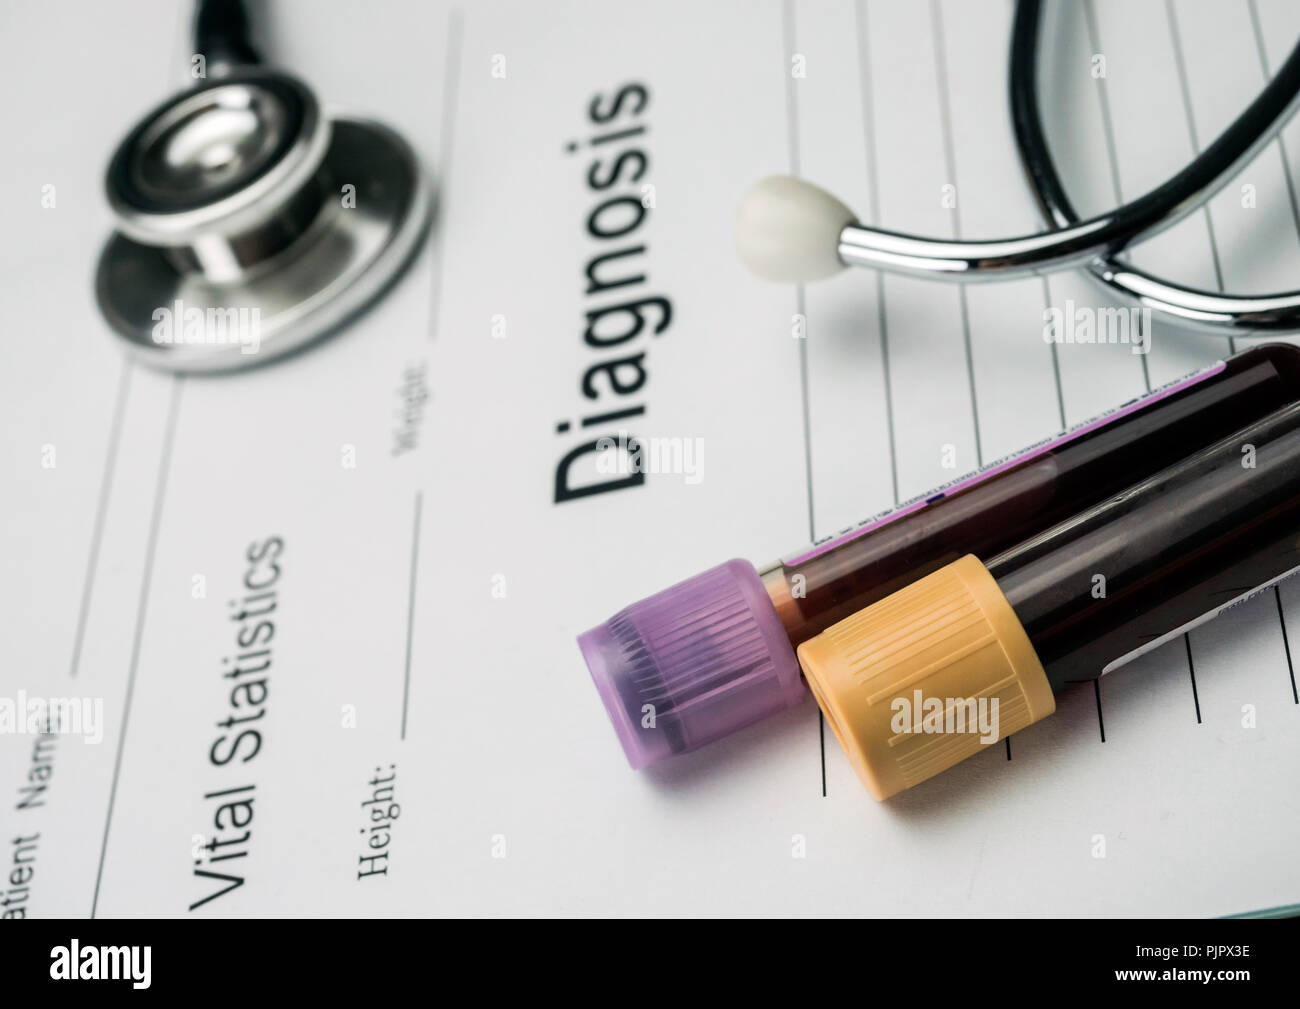 Diagnostic form, Vial of blood samples and Medicine in a hospital ...